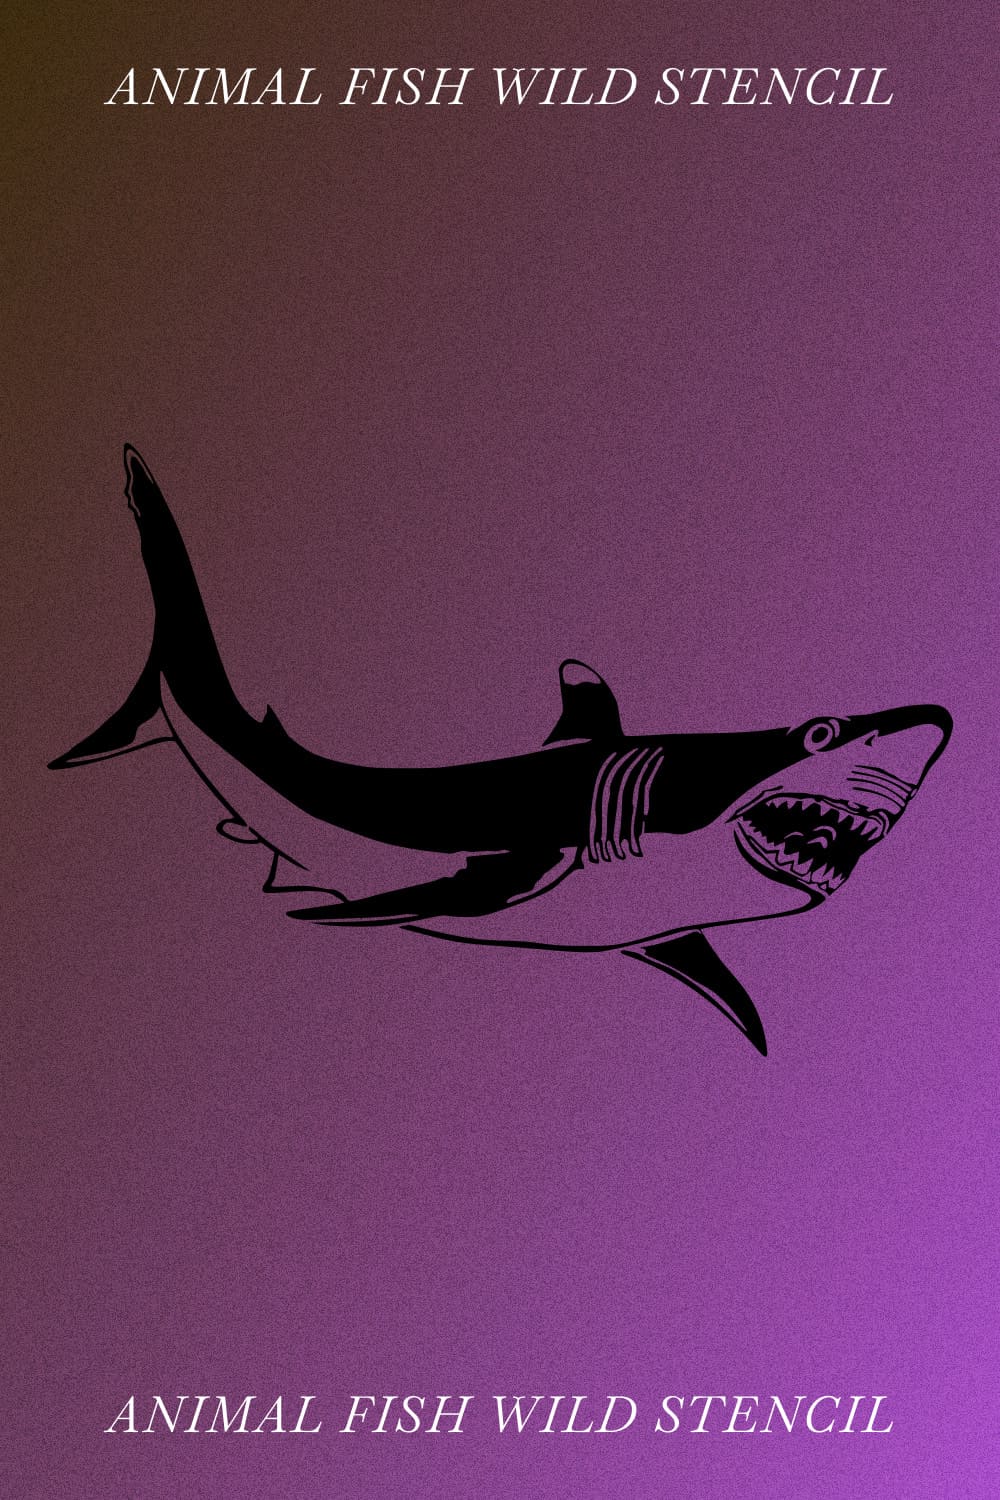 Animal Fish Wild Stencil - Pinterest Image.